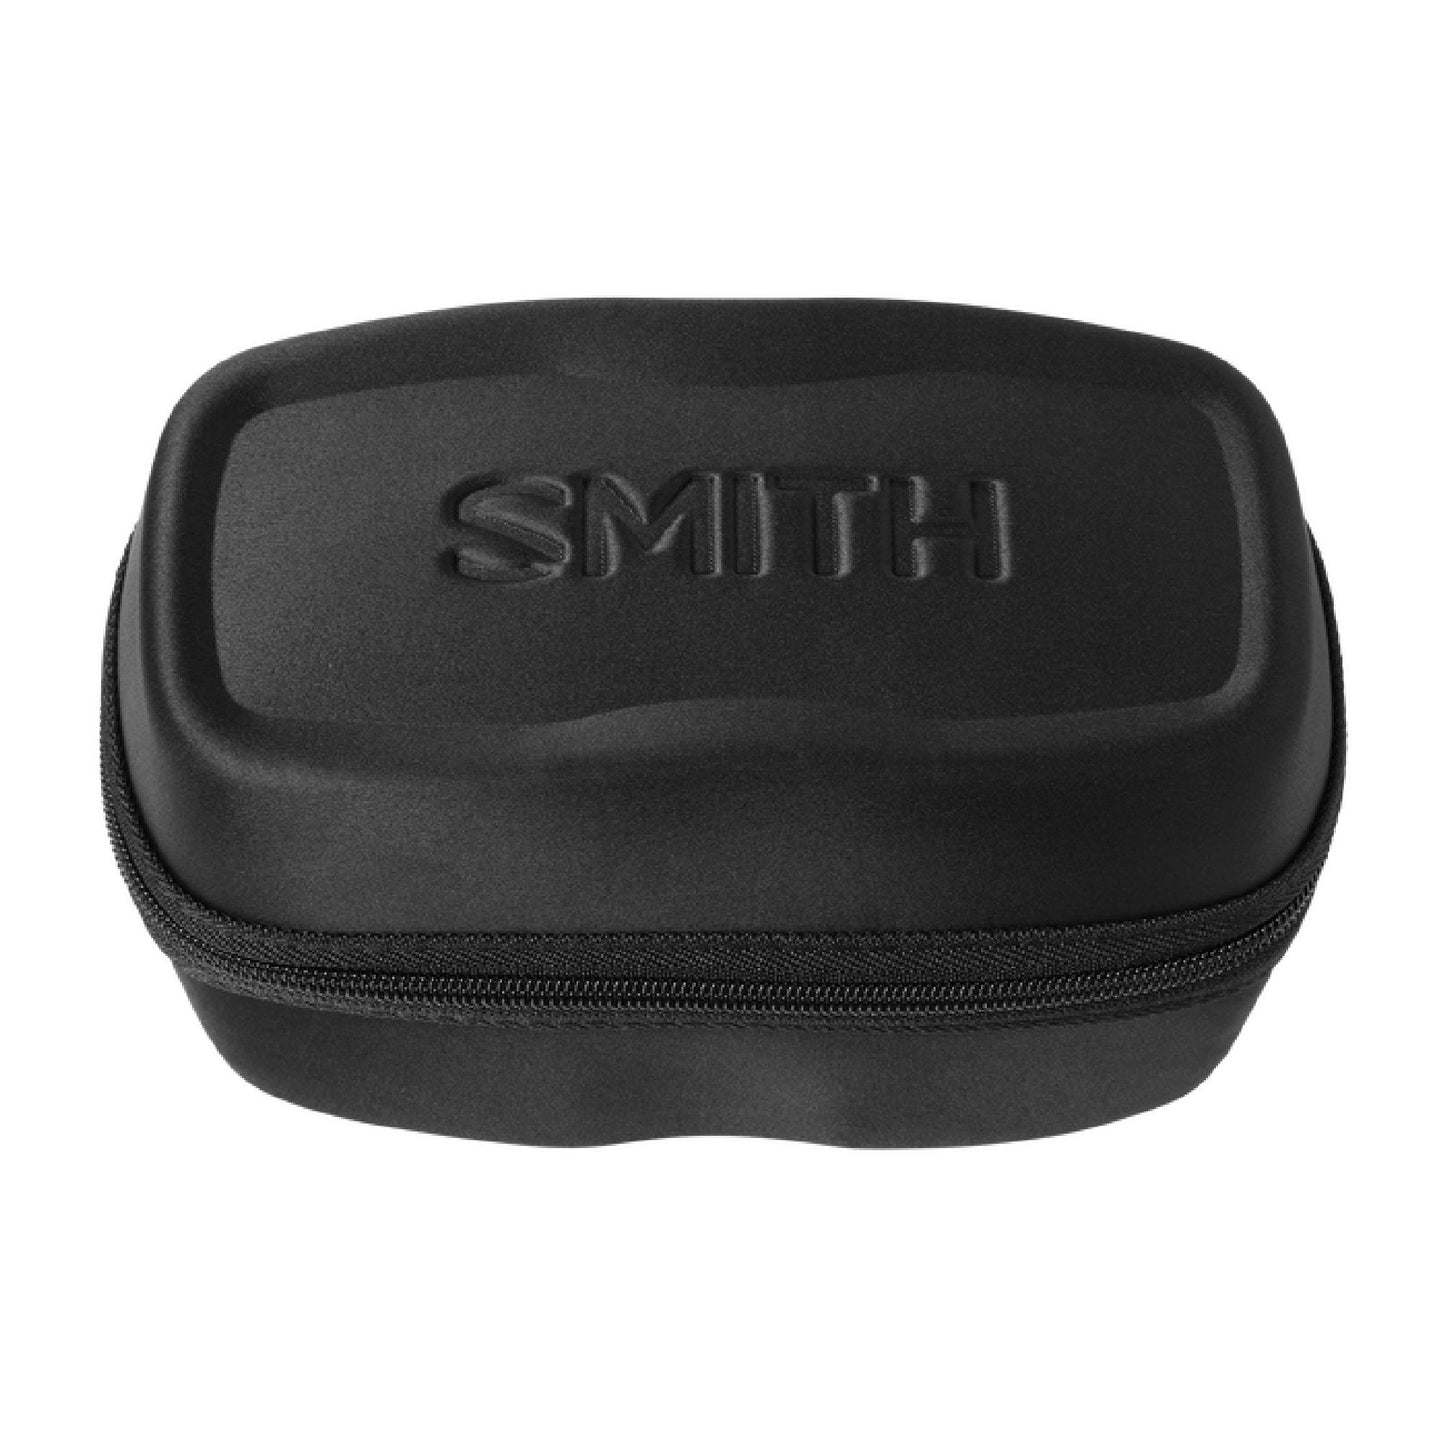 Smith 4D MAG Snow Goggle White Vapor / ChromaPop Everyday Green Mirror Snow Goggles